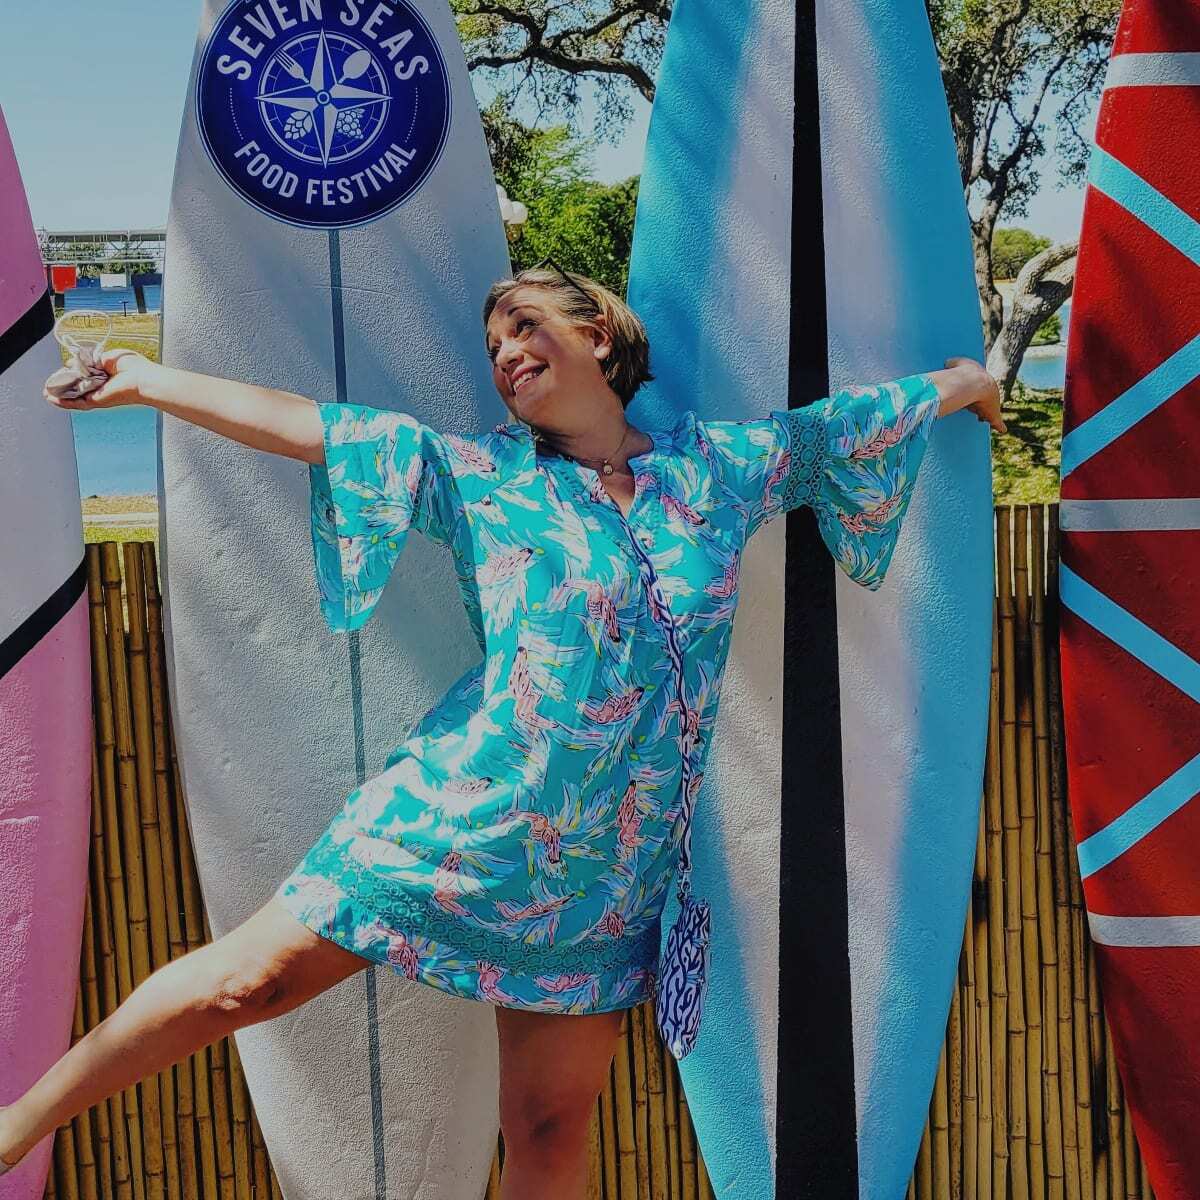 USA woman travel blogger dancing at a Seven Seas Food Festival sign